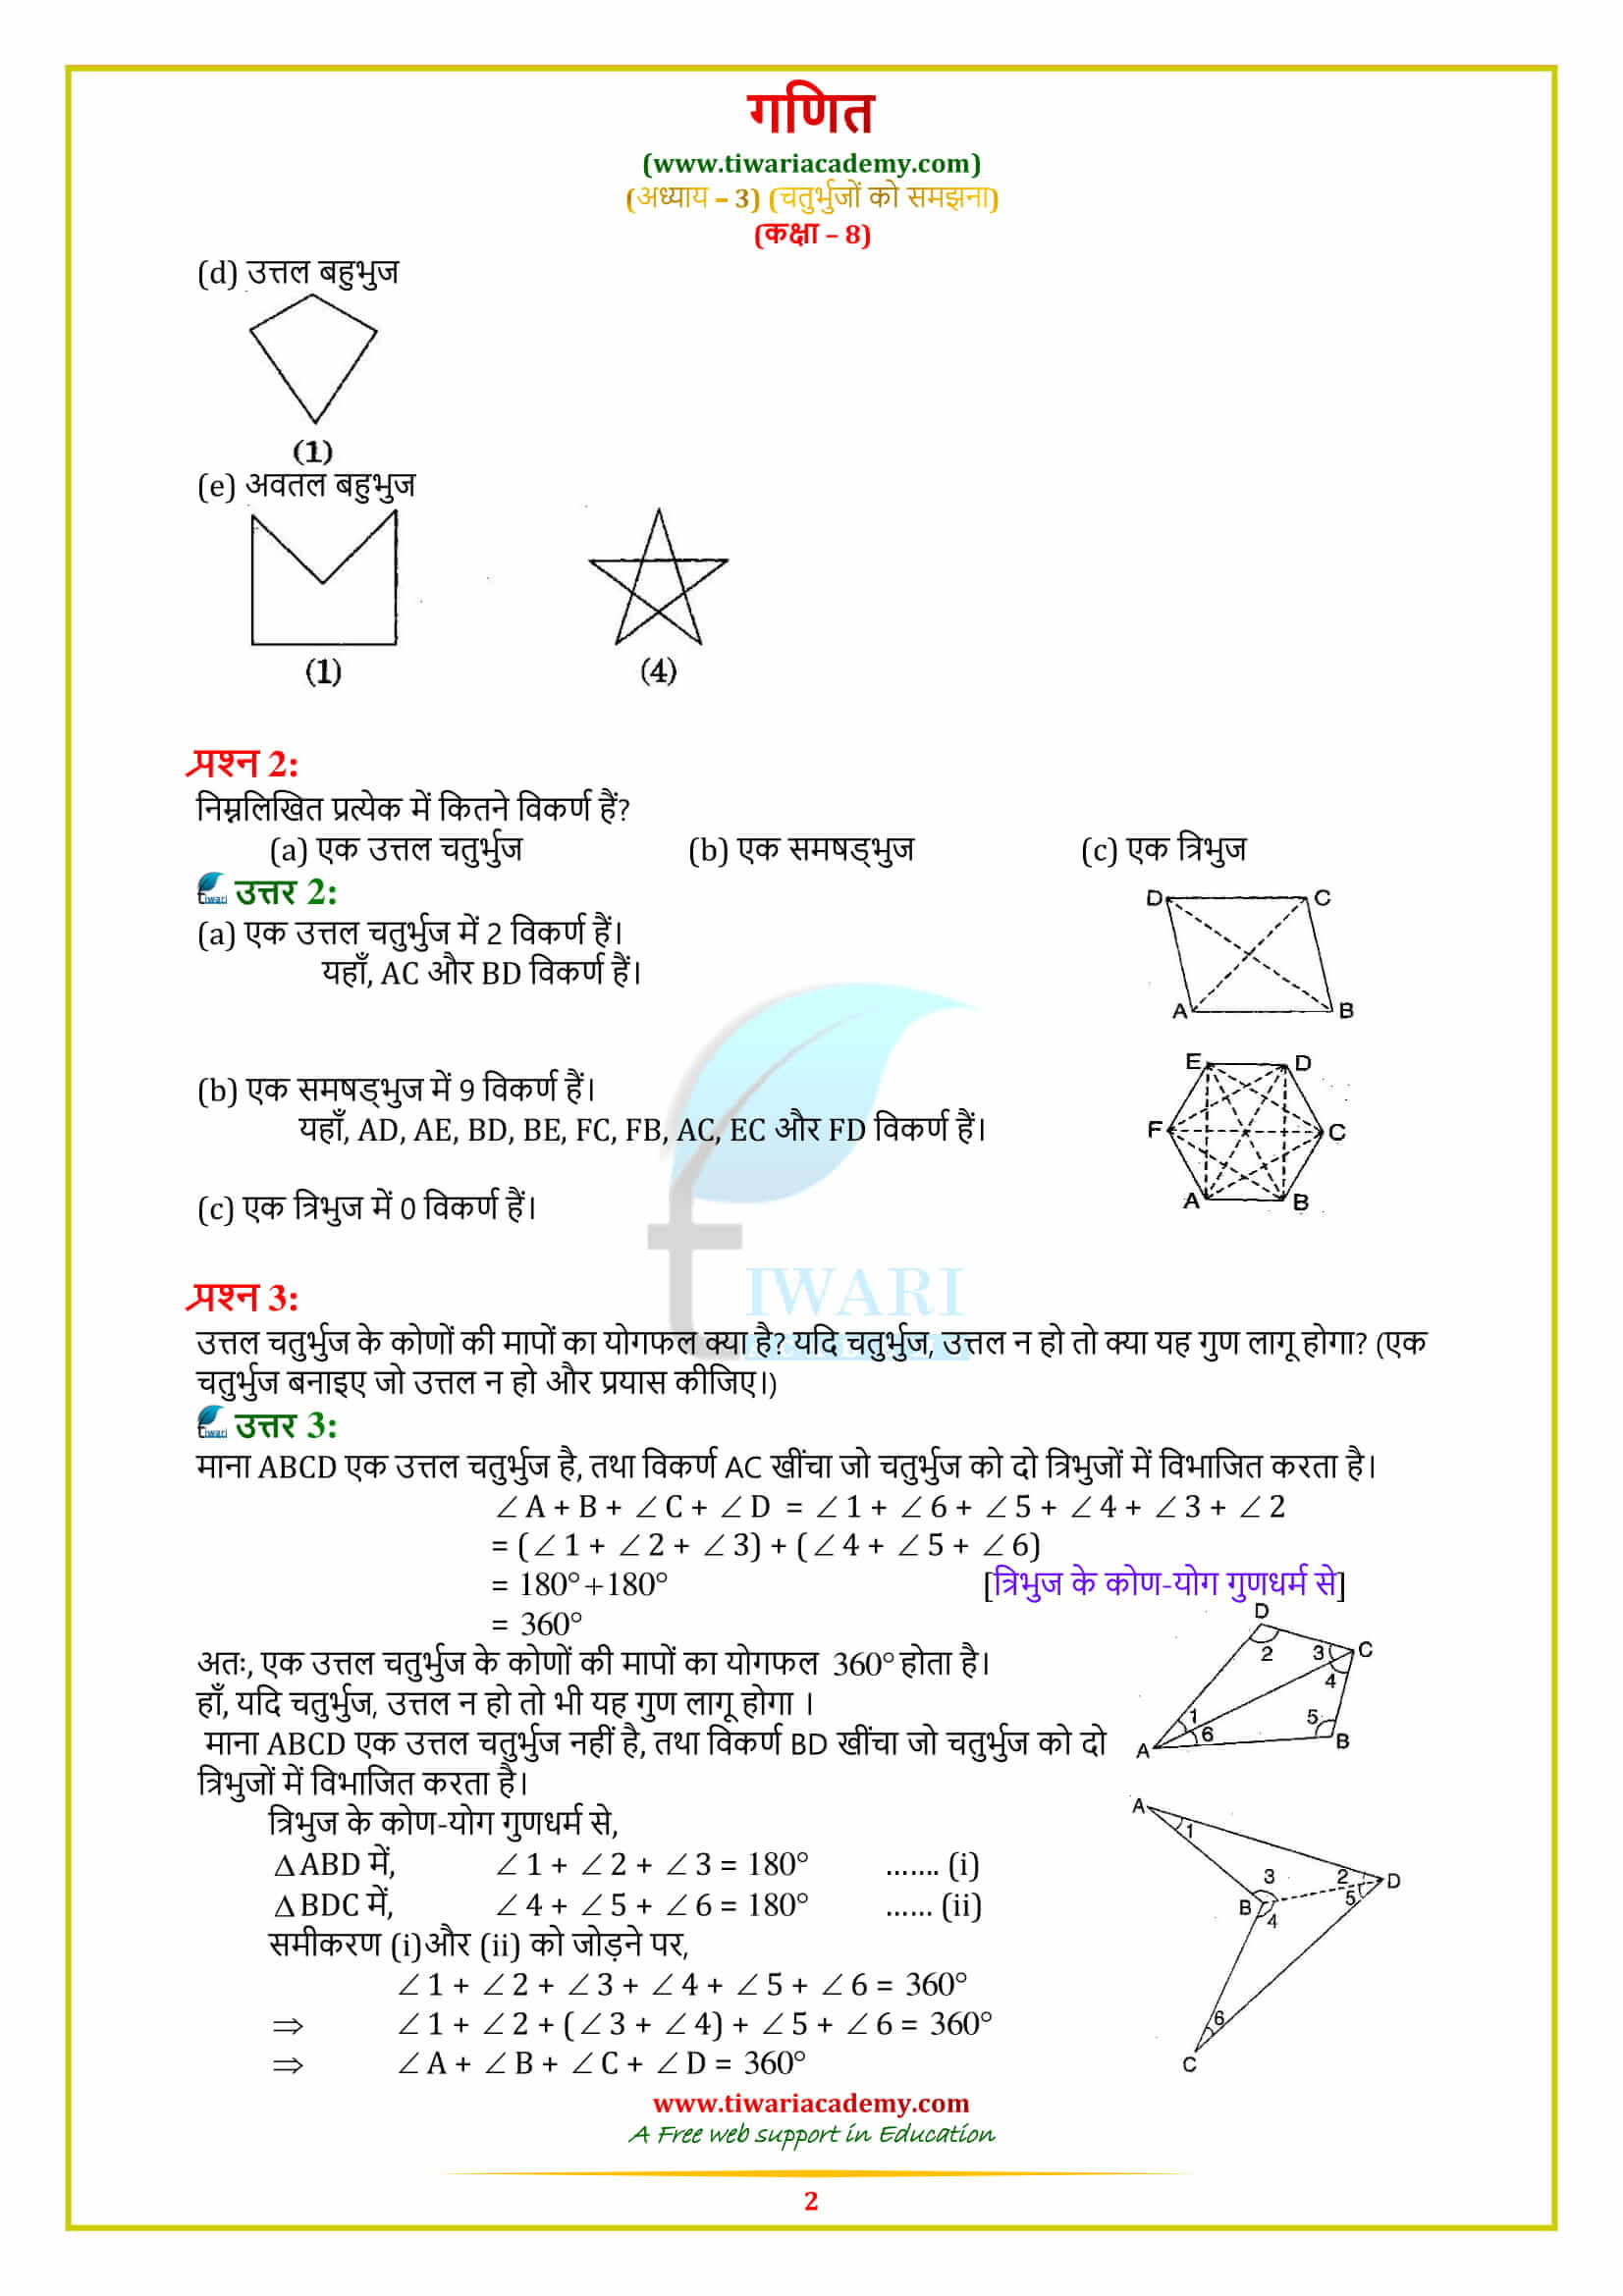 8 Maths Exercise 3.1 Solutions in hindi medium pdf